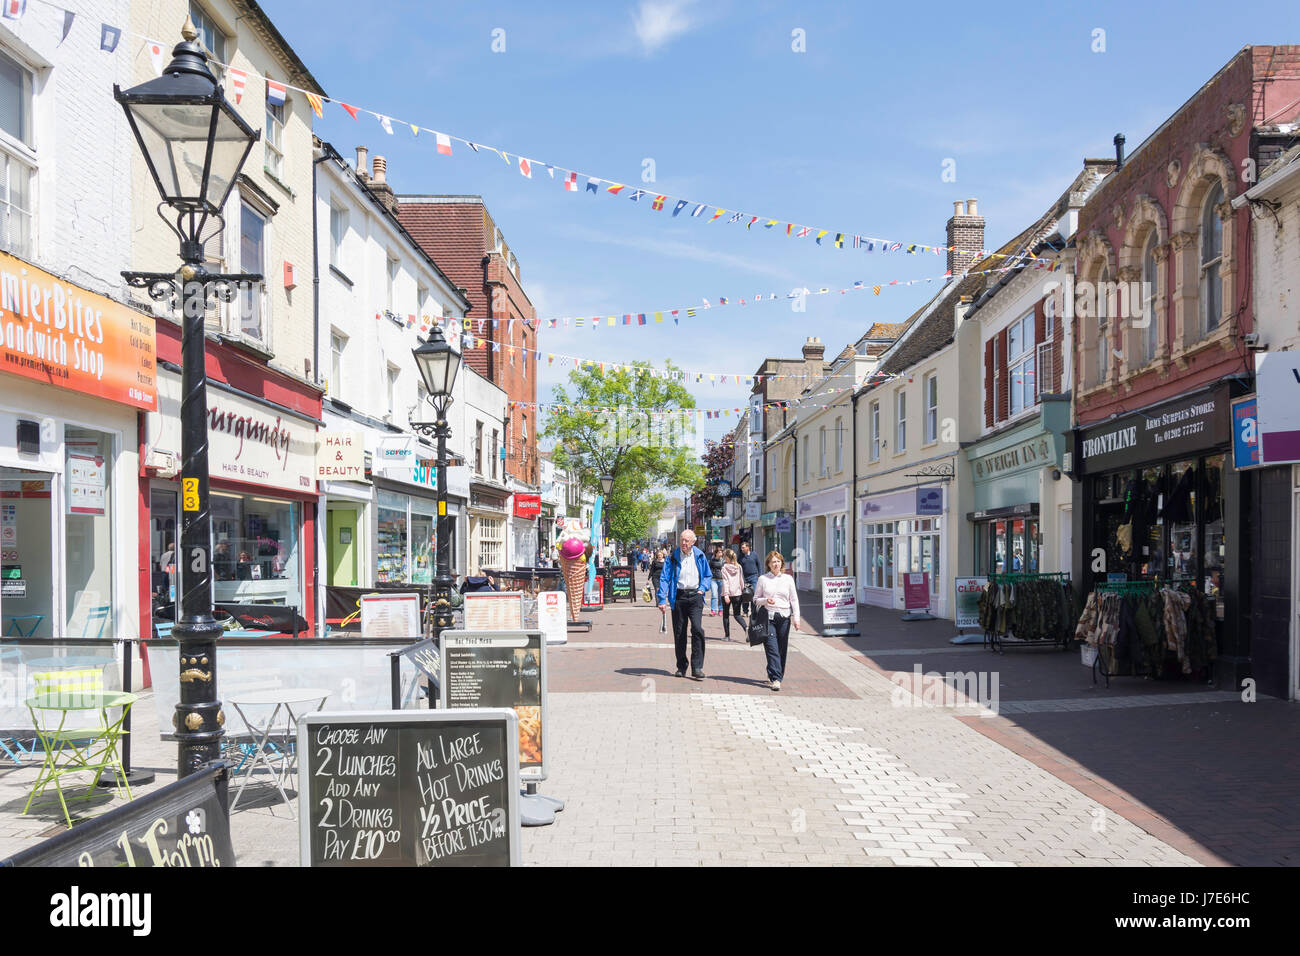 Pedestrianised High Street, Poole, Dorset, England, United Kingdom Stock Photo